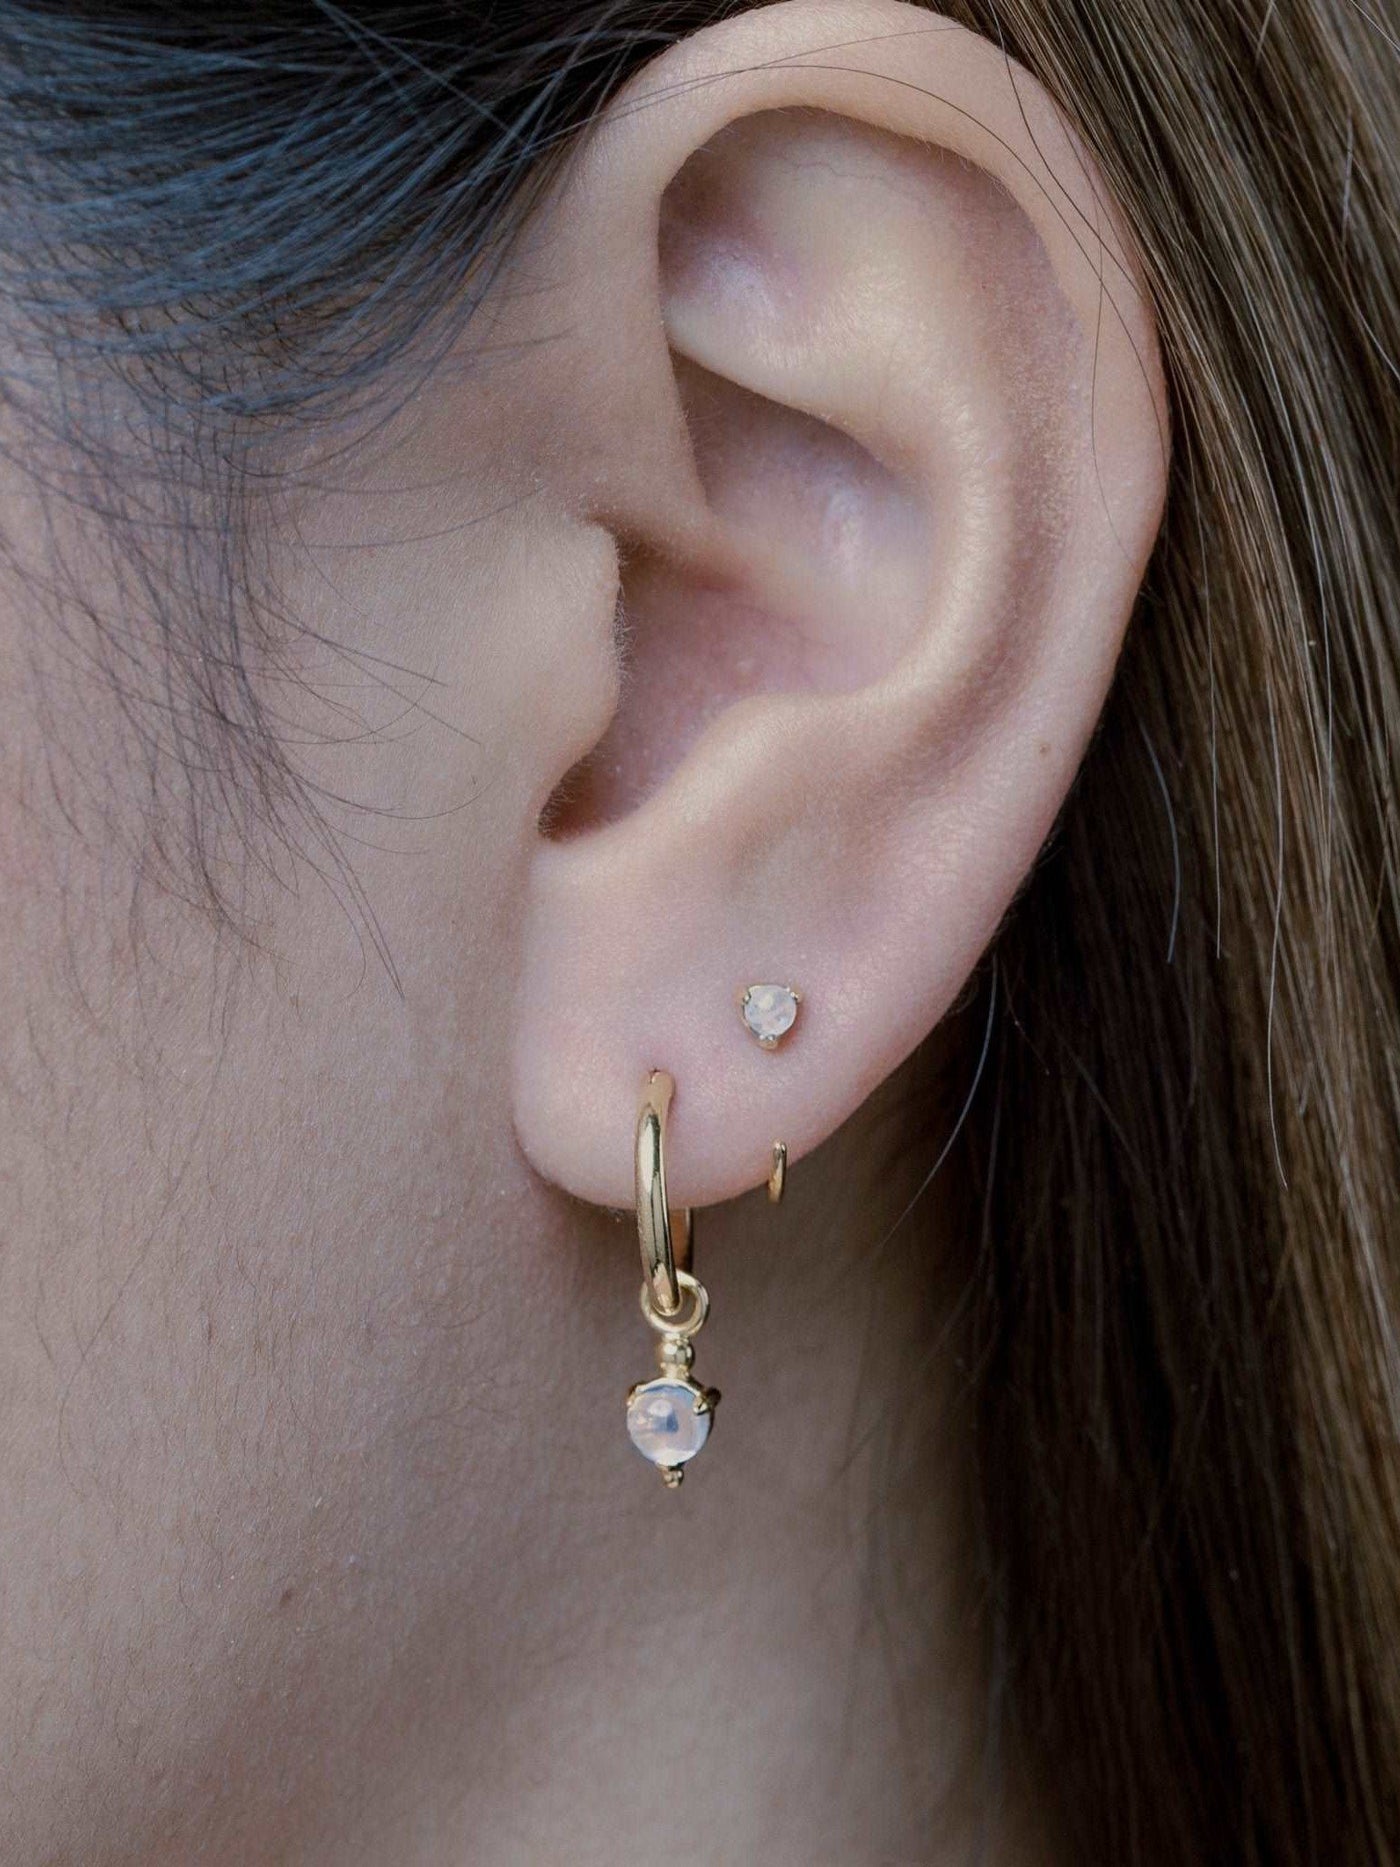 Claire Hoop Earrings - 925 Sterling SilverBackUpItemsBirthstone HoopsLunai Jewelry